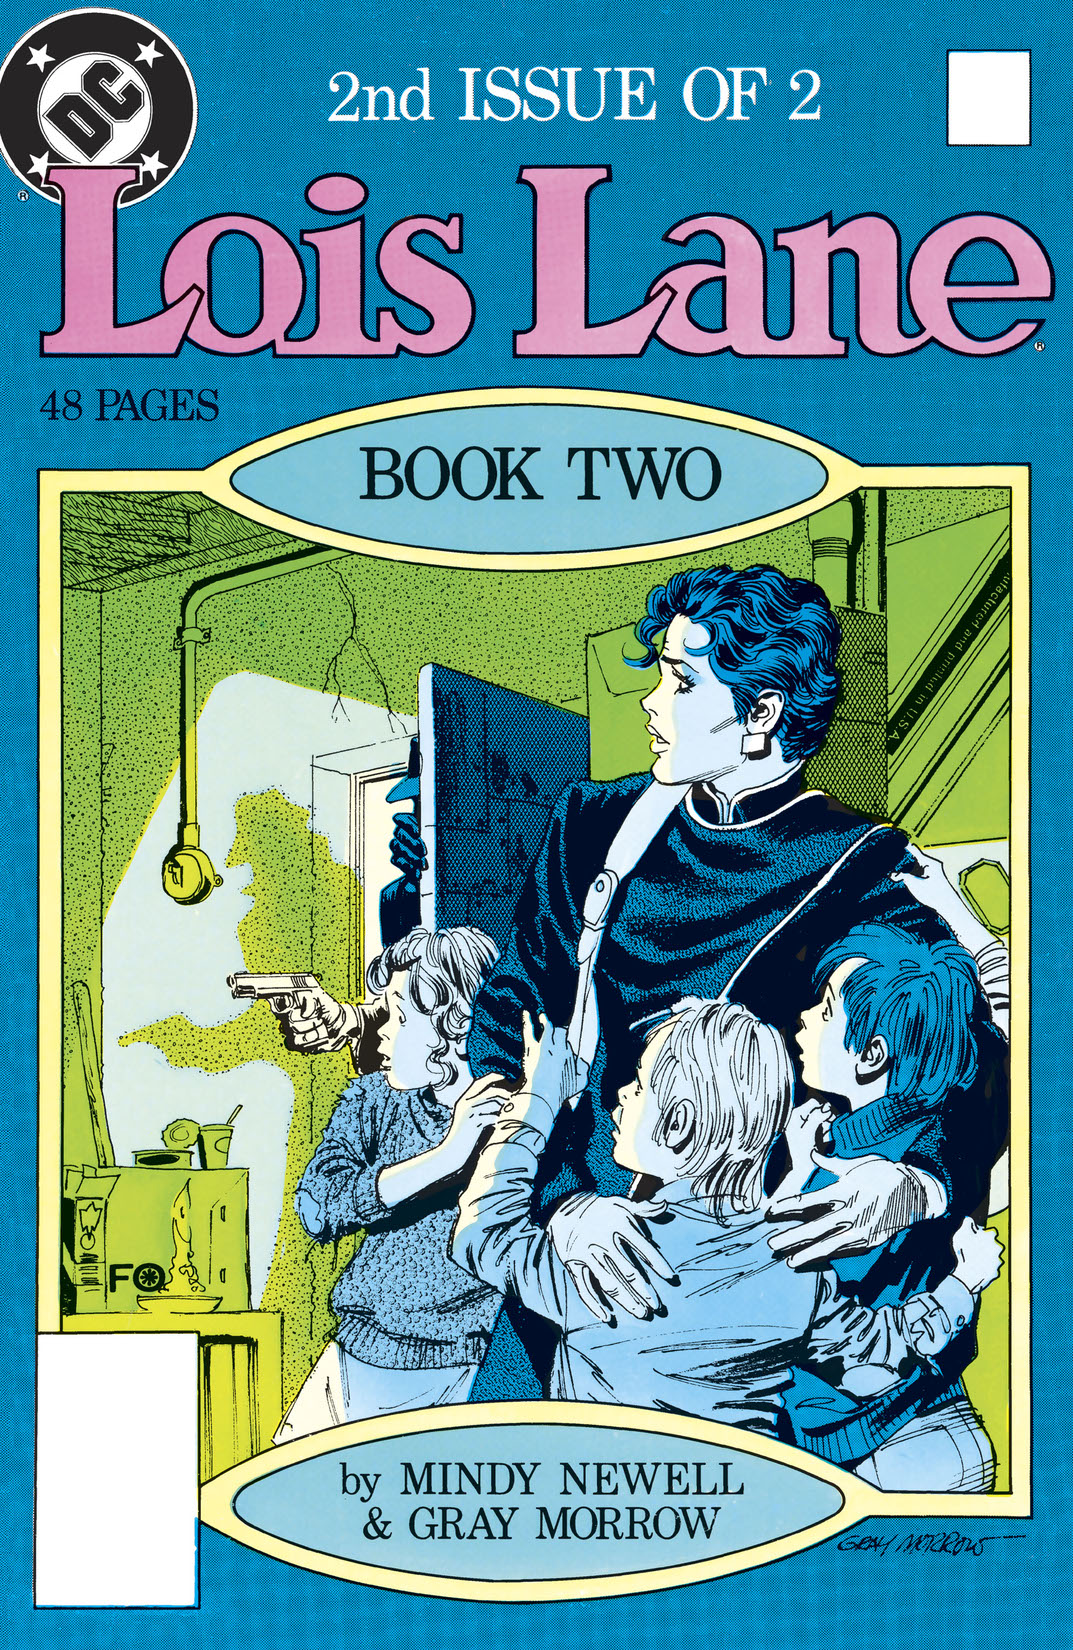 Lois Lane (1986-) #2 preview images